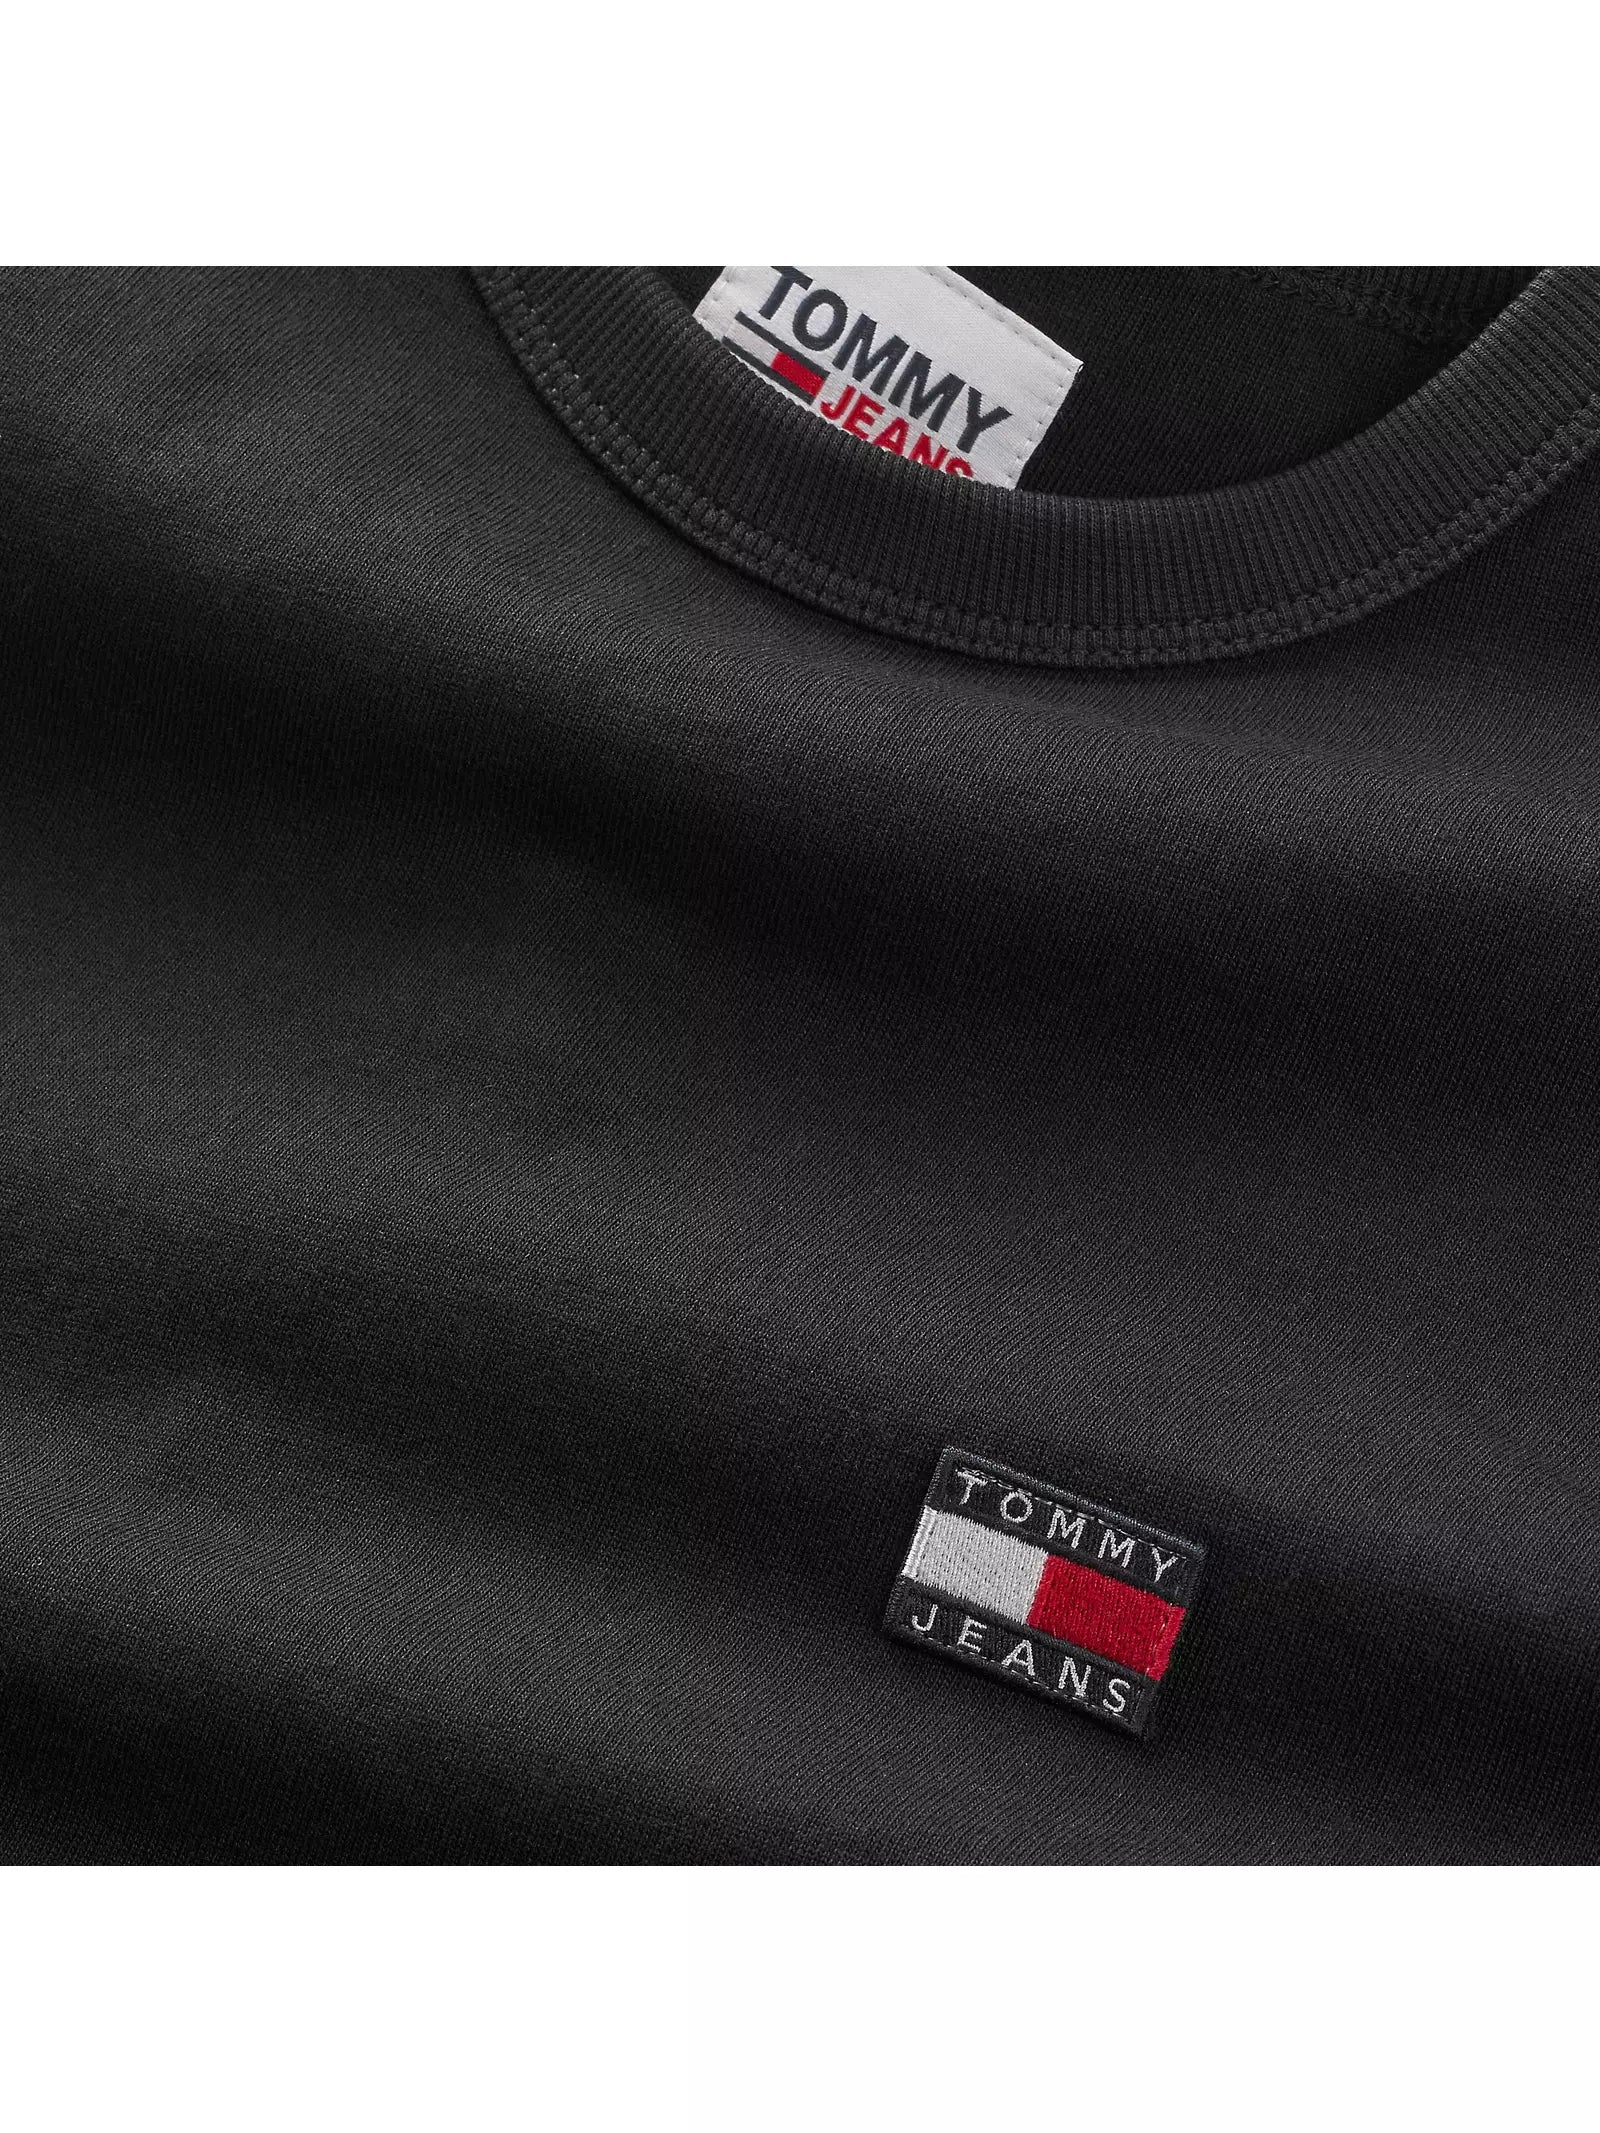 TJM classic XS badge longsleeve t-shirt - Black